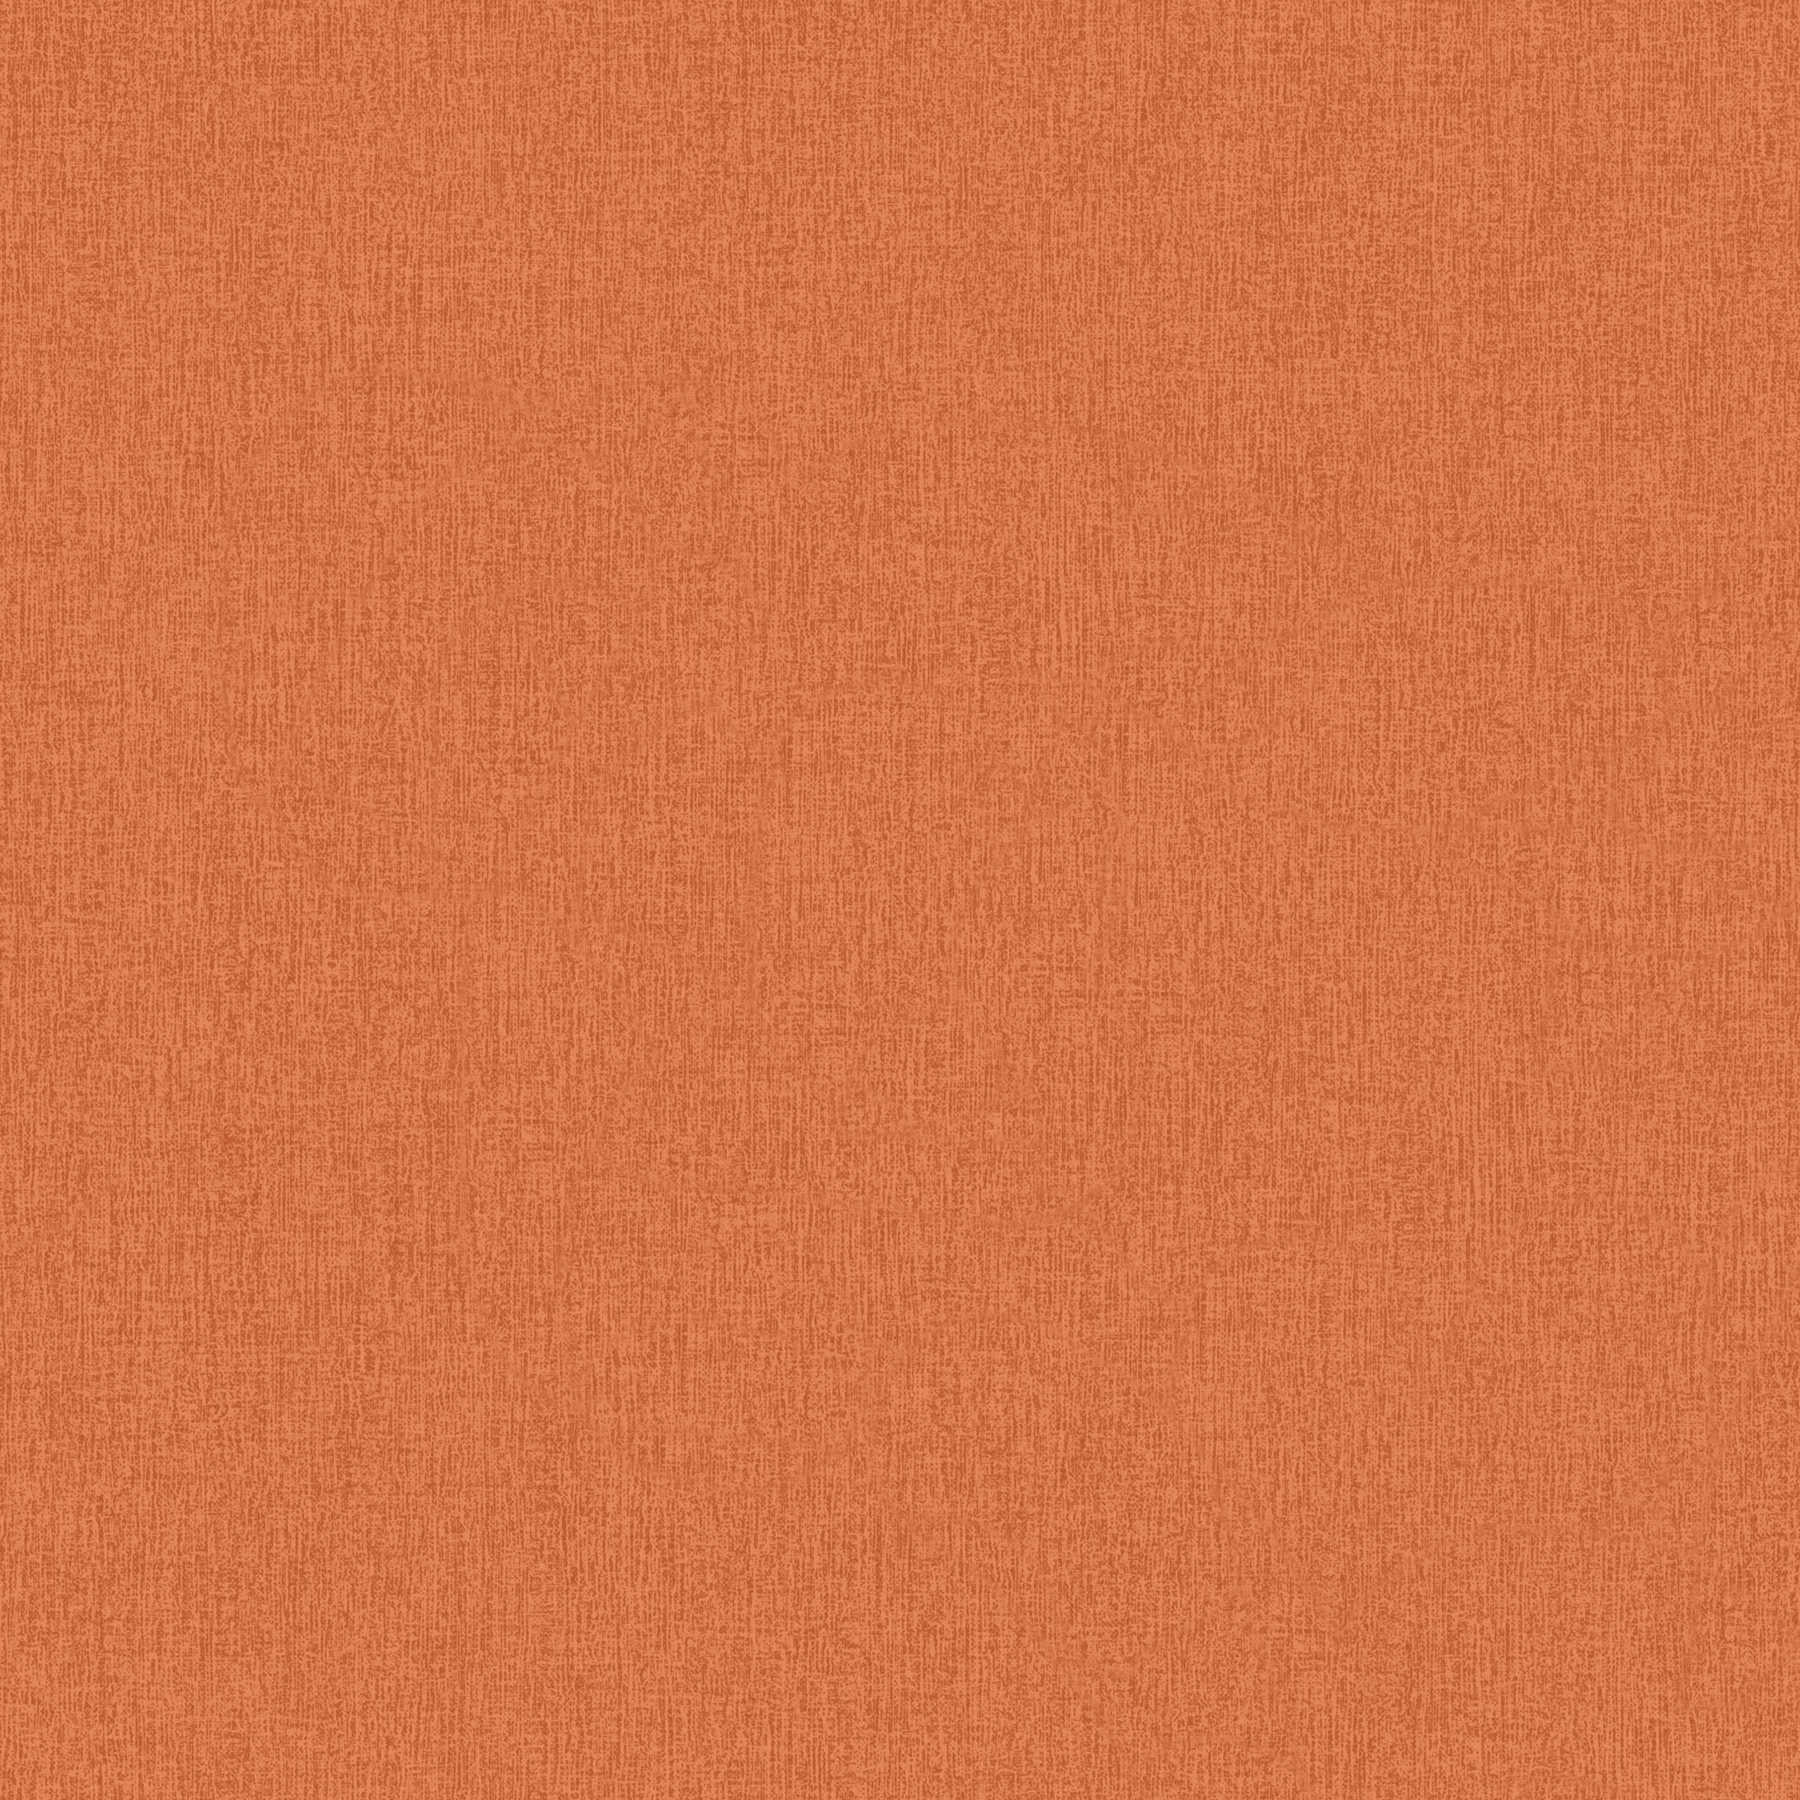 Plain wallpaper mottled with fabric texture - orange
